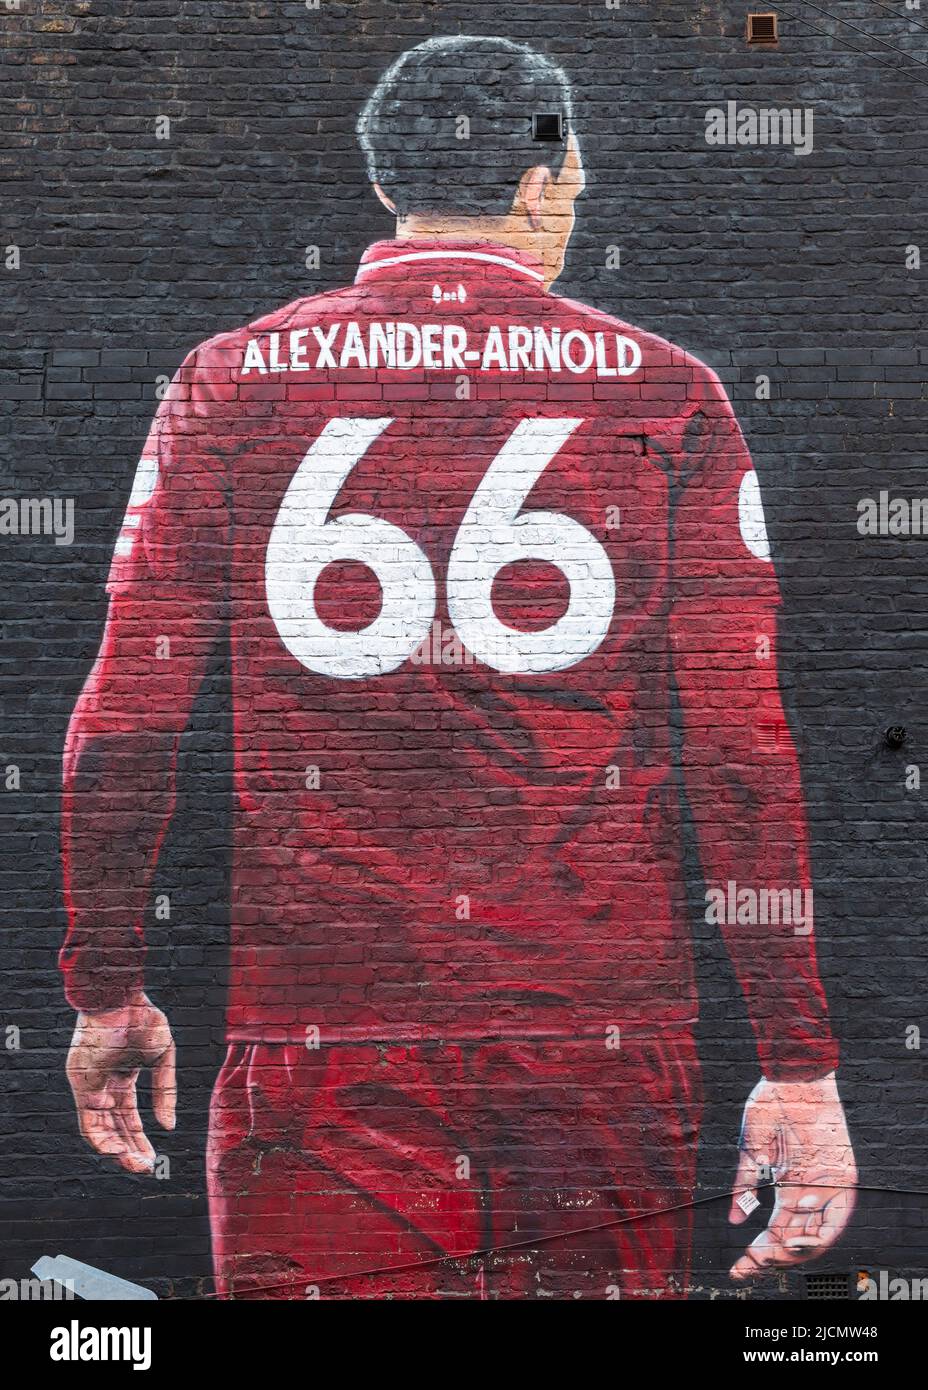 Trent Alexander-Arnold mural, Liverpool FC street art, Anfield, Liverpool, England, UK Stock Photo